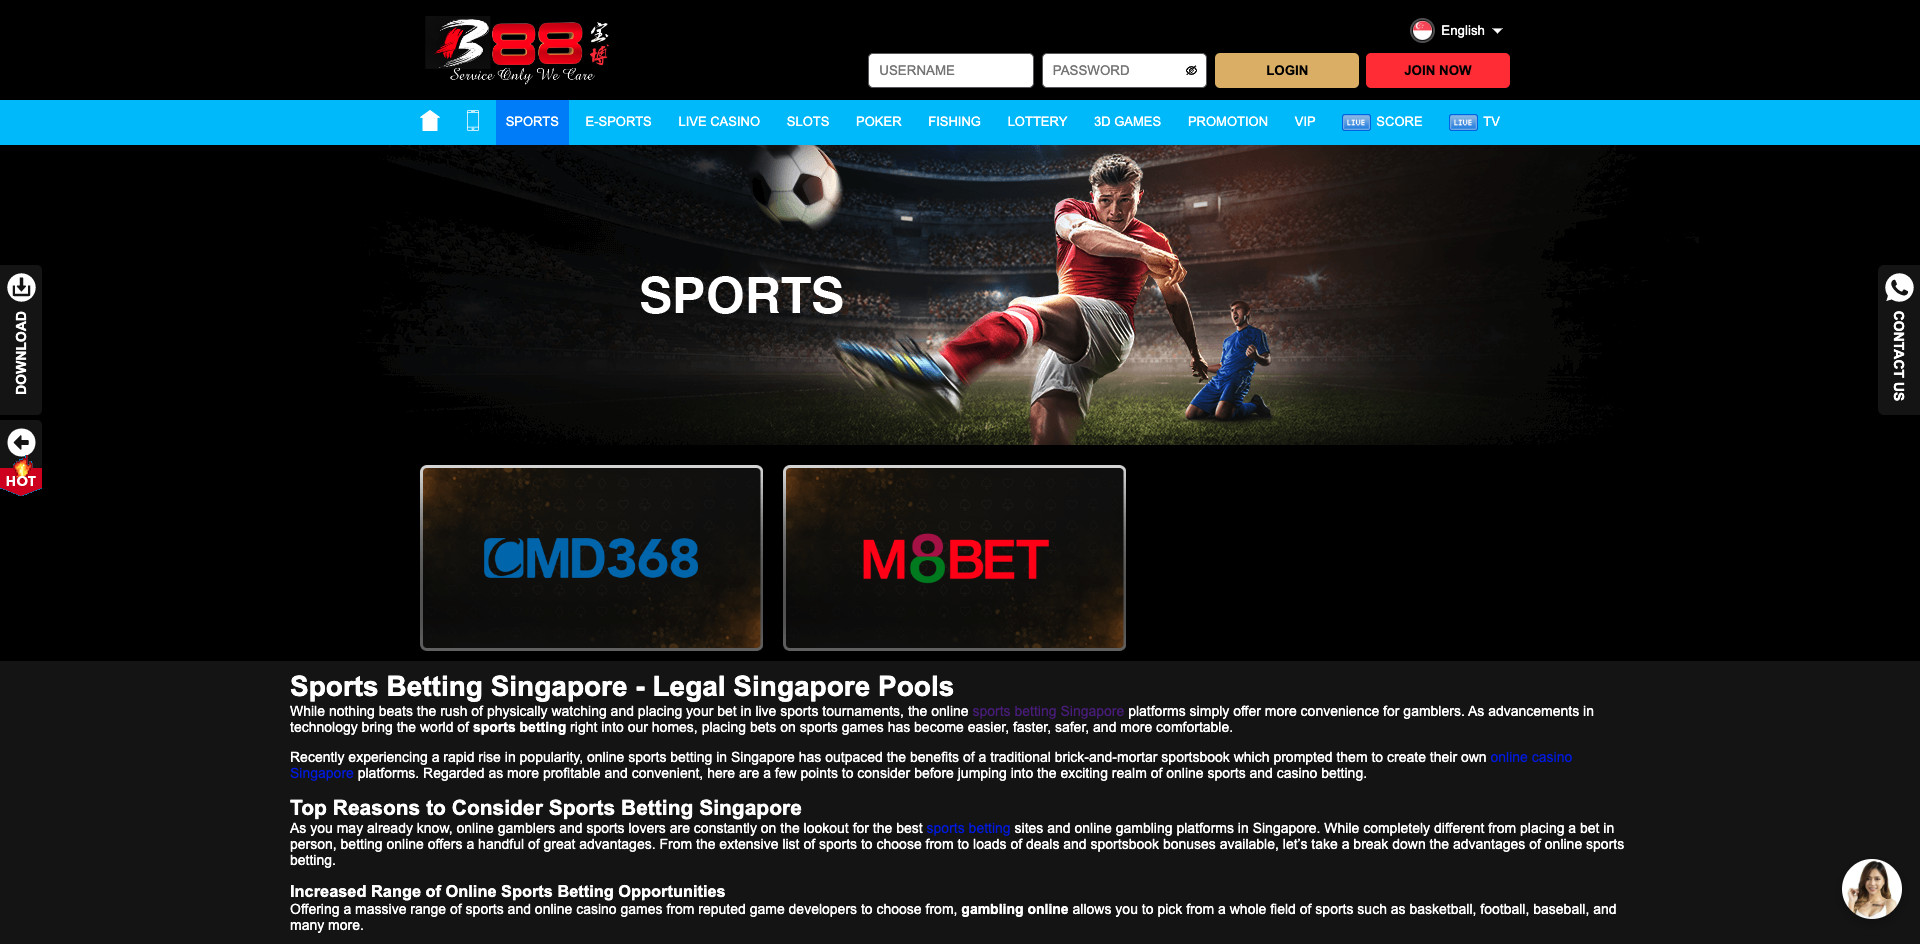 B88 Online Betting Site Singapore